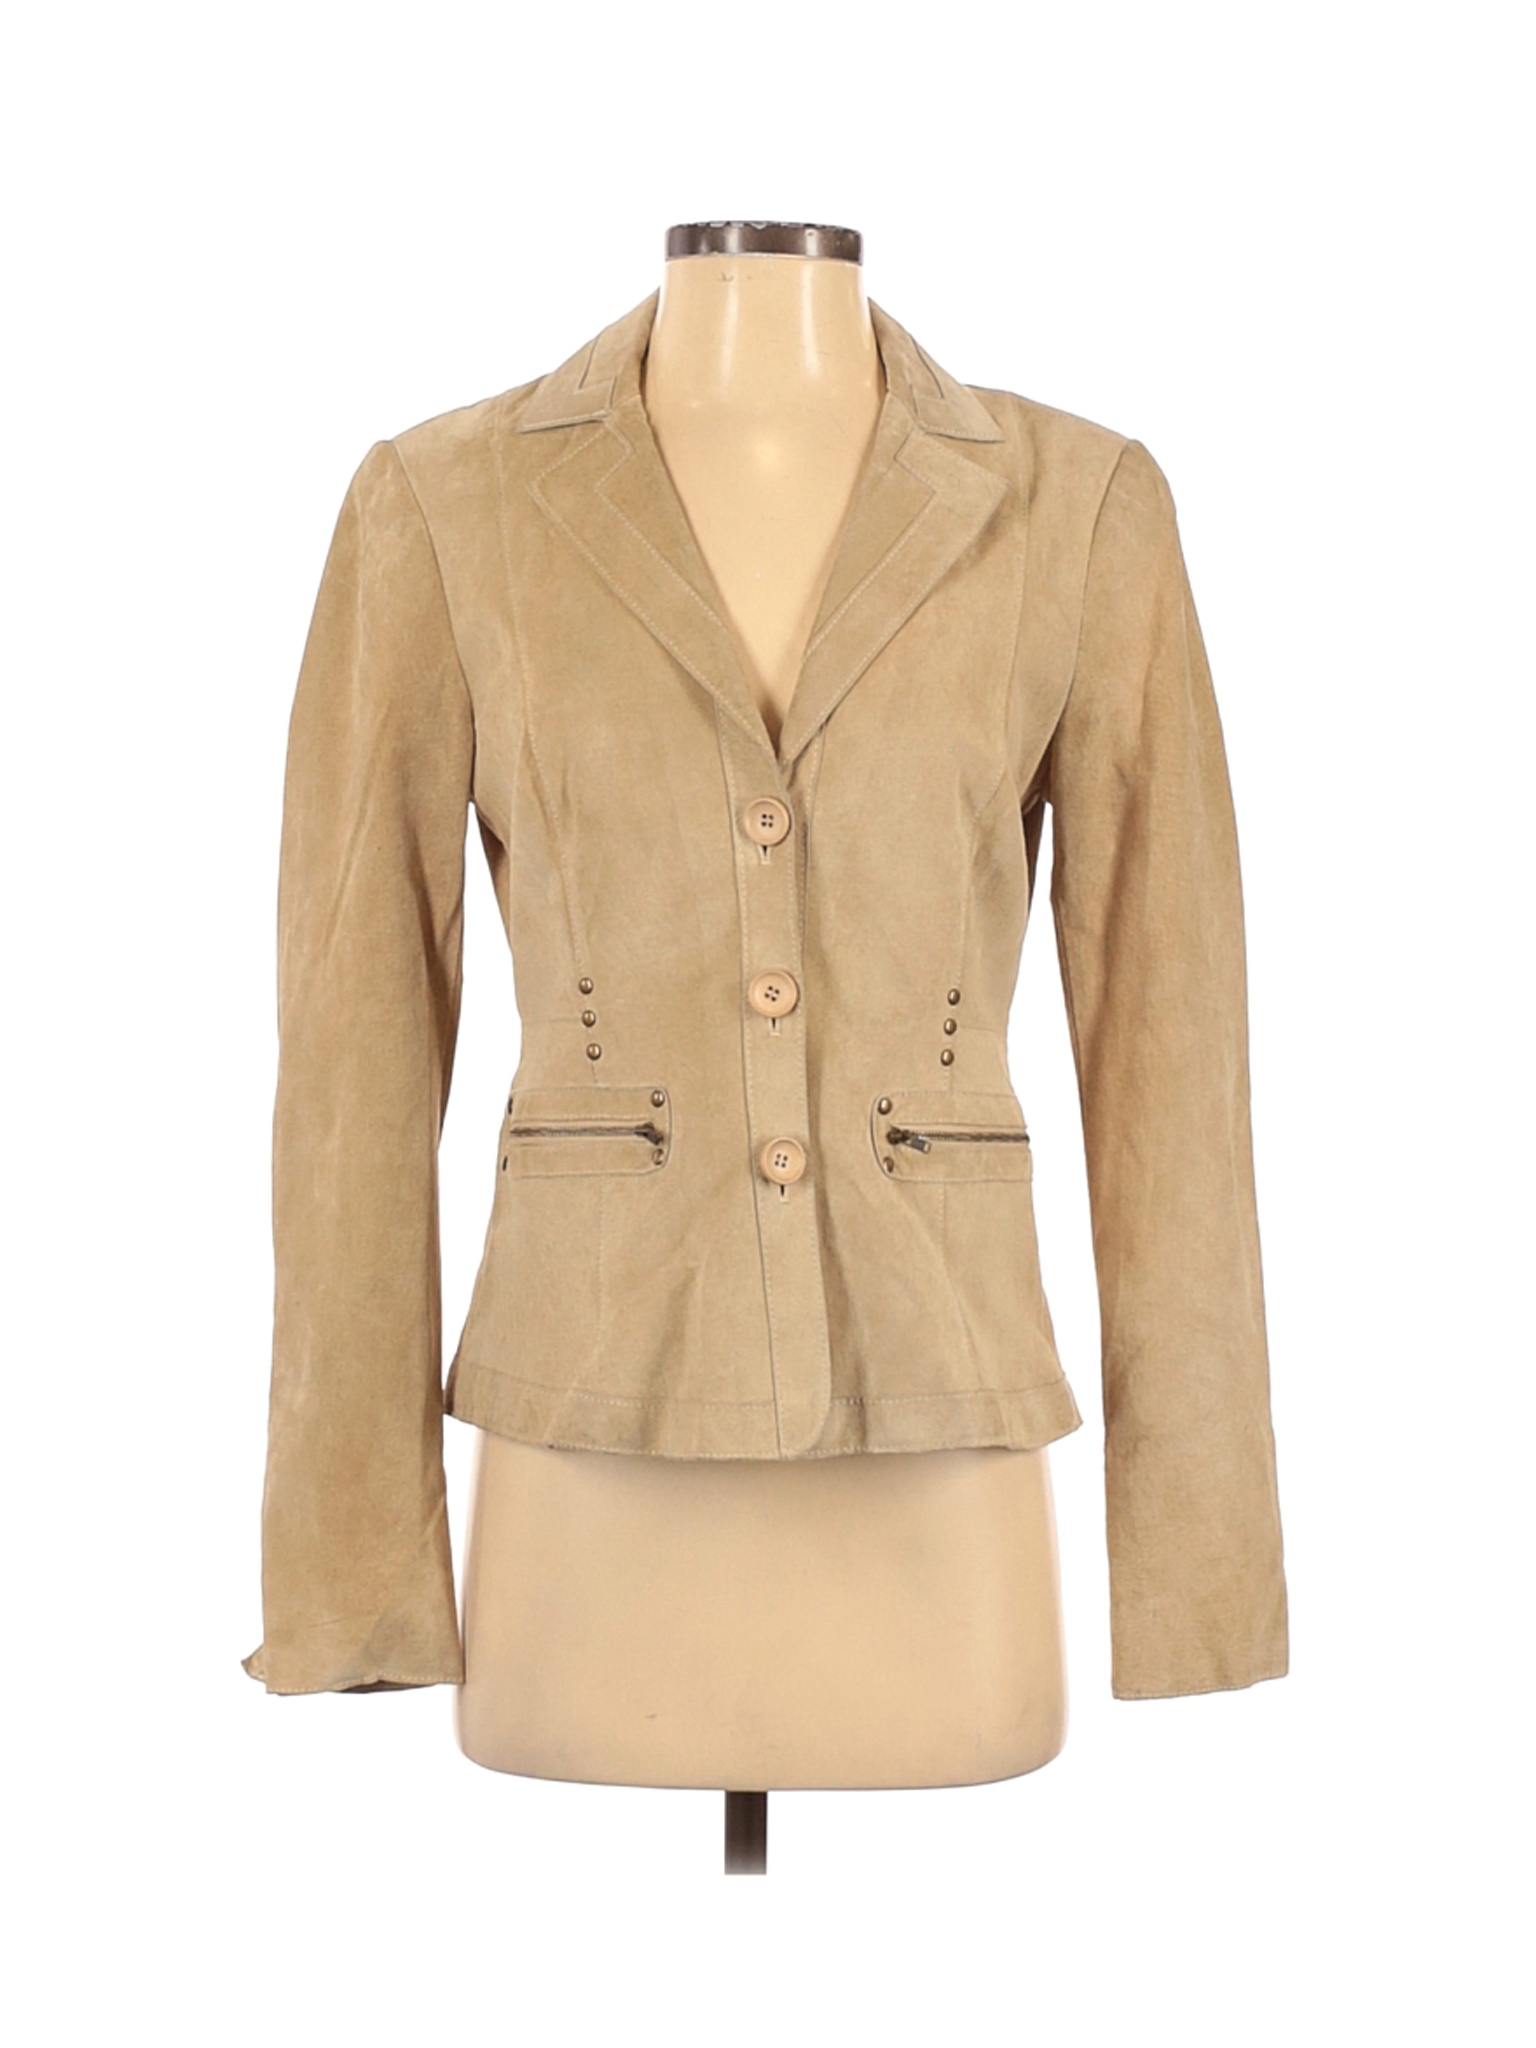 W by Worth Women Brown Leather Jacket 4 | eBay